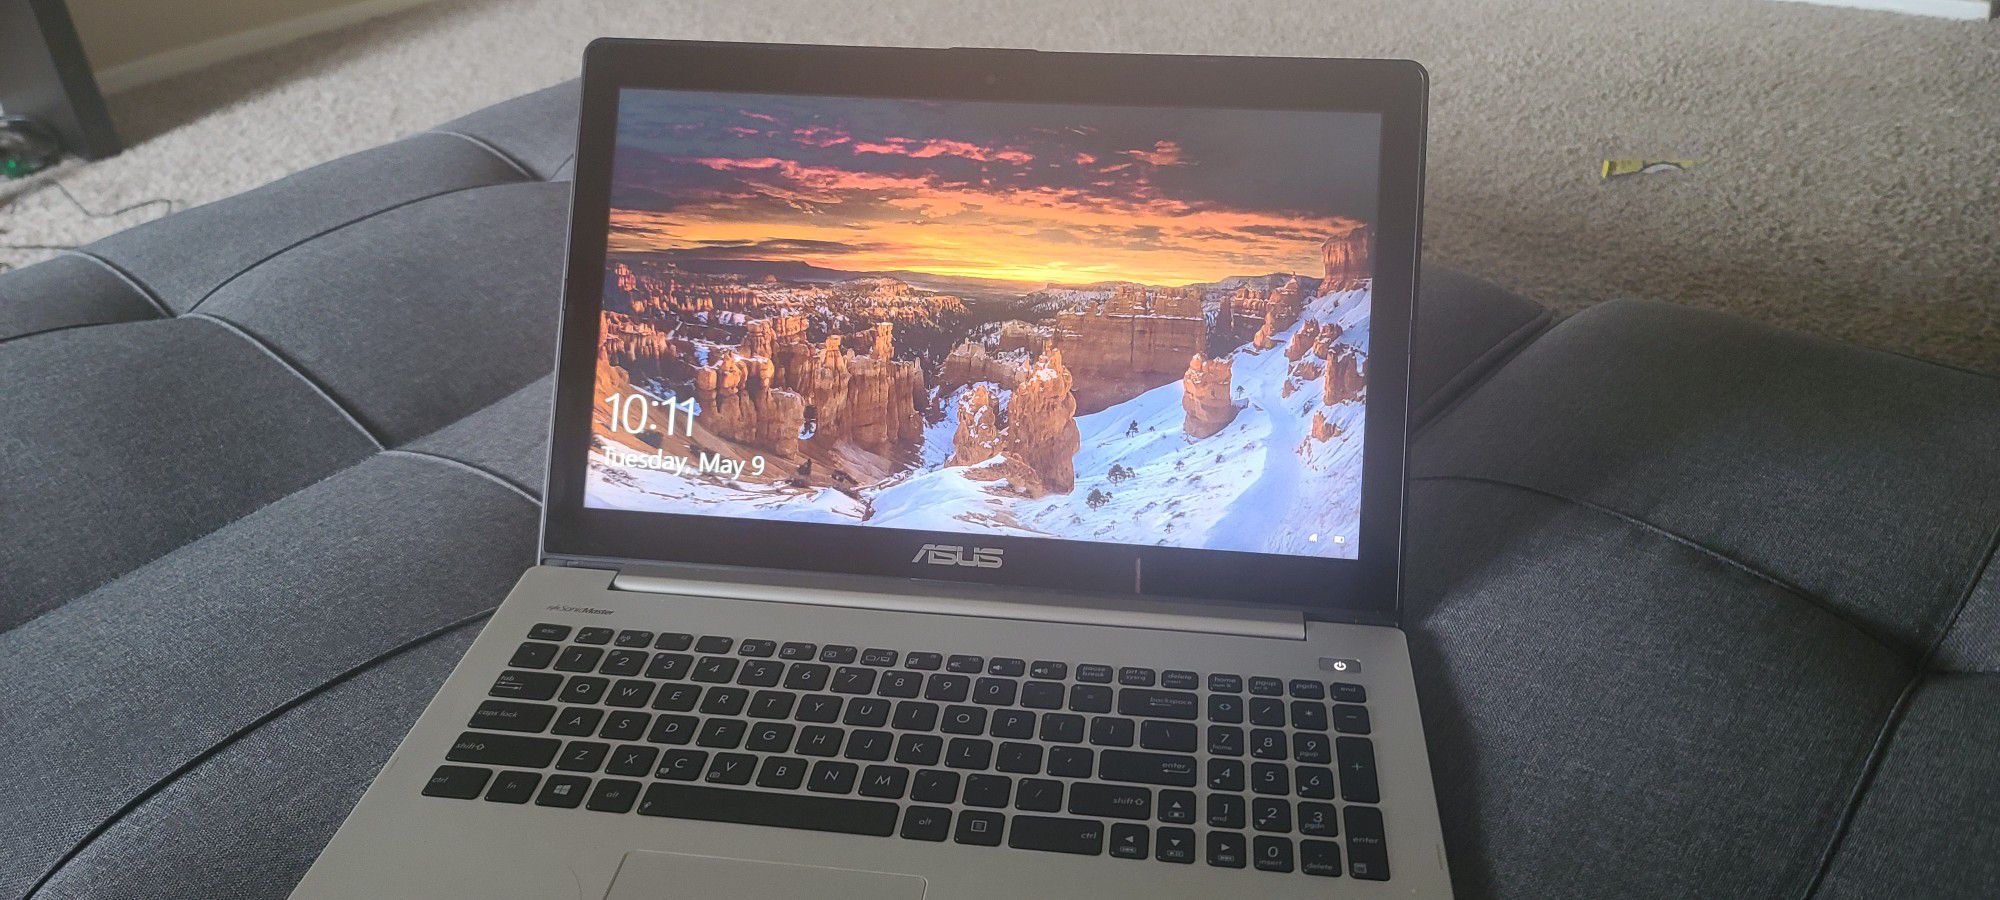 asus laptop 17 inch screen